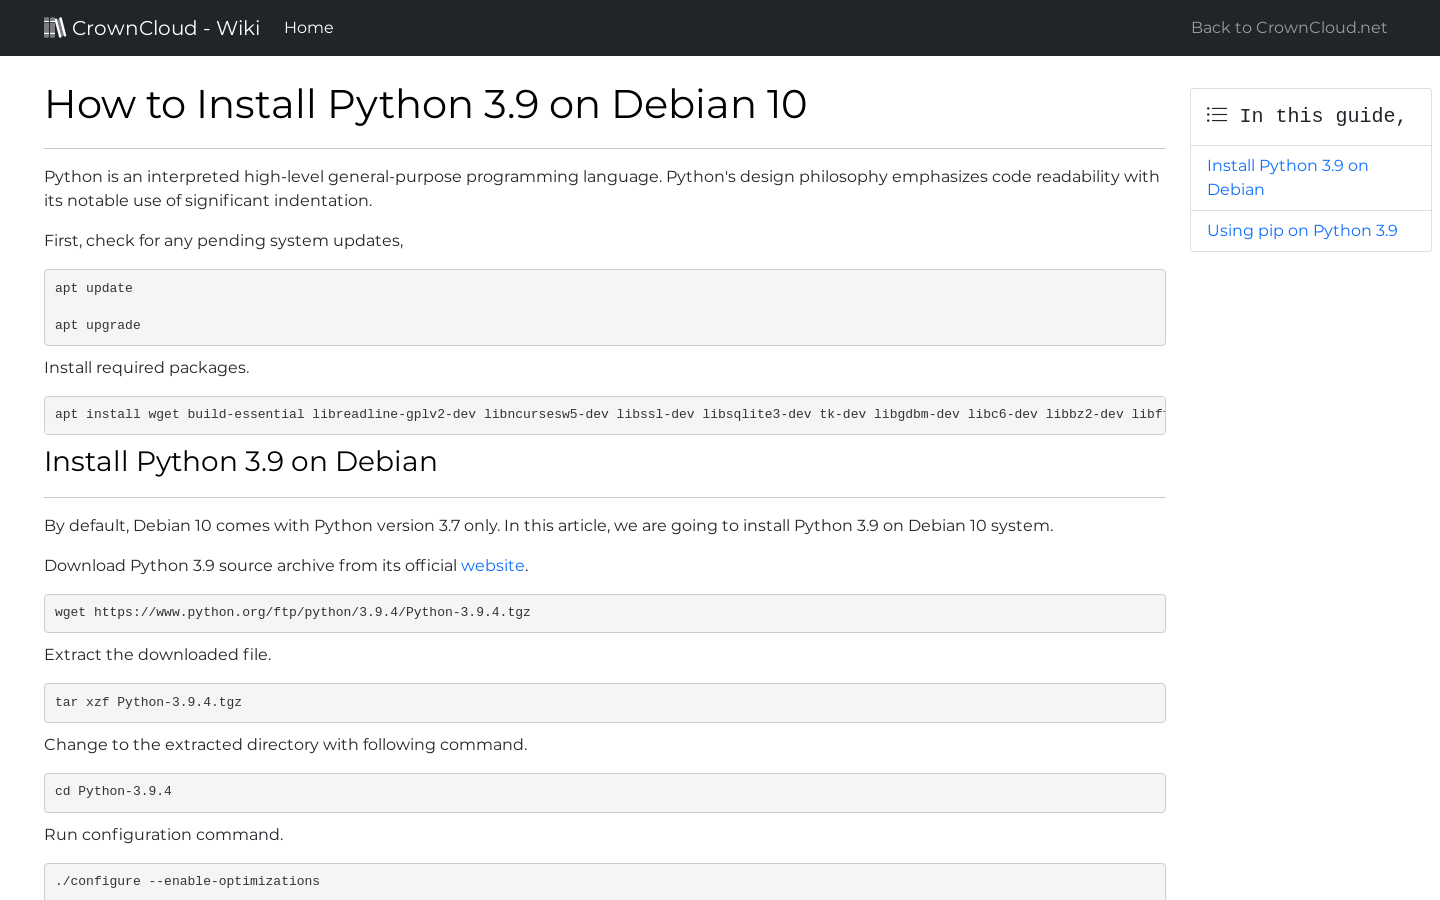 debian install python 3.7